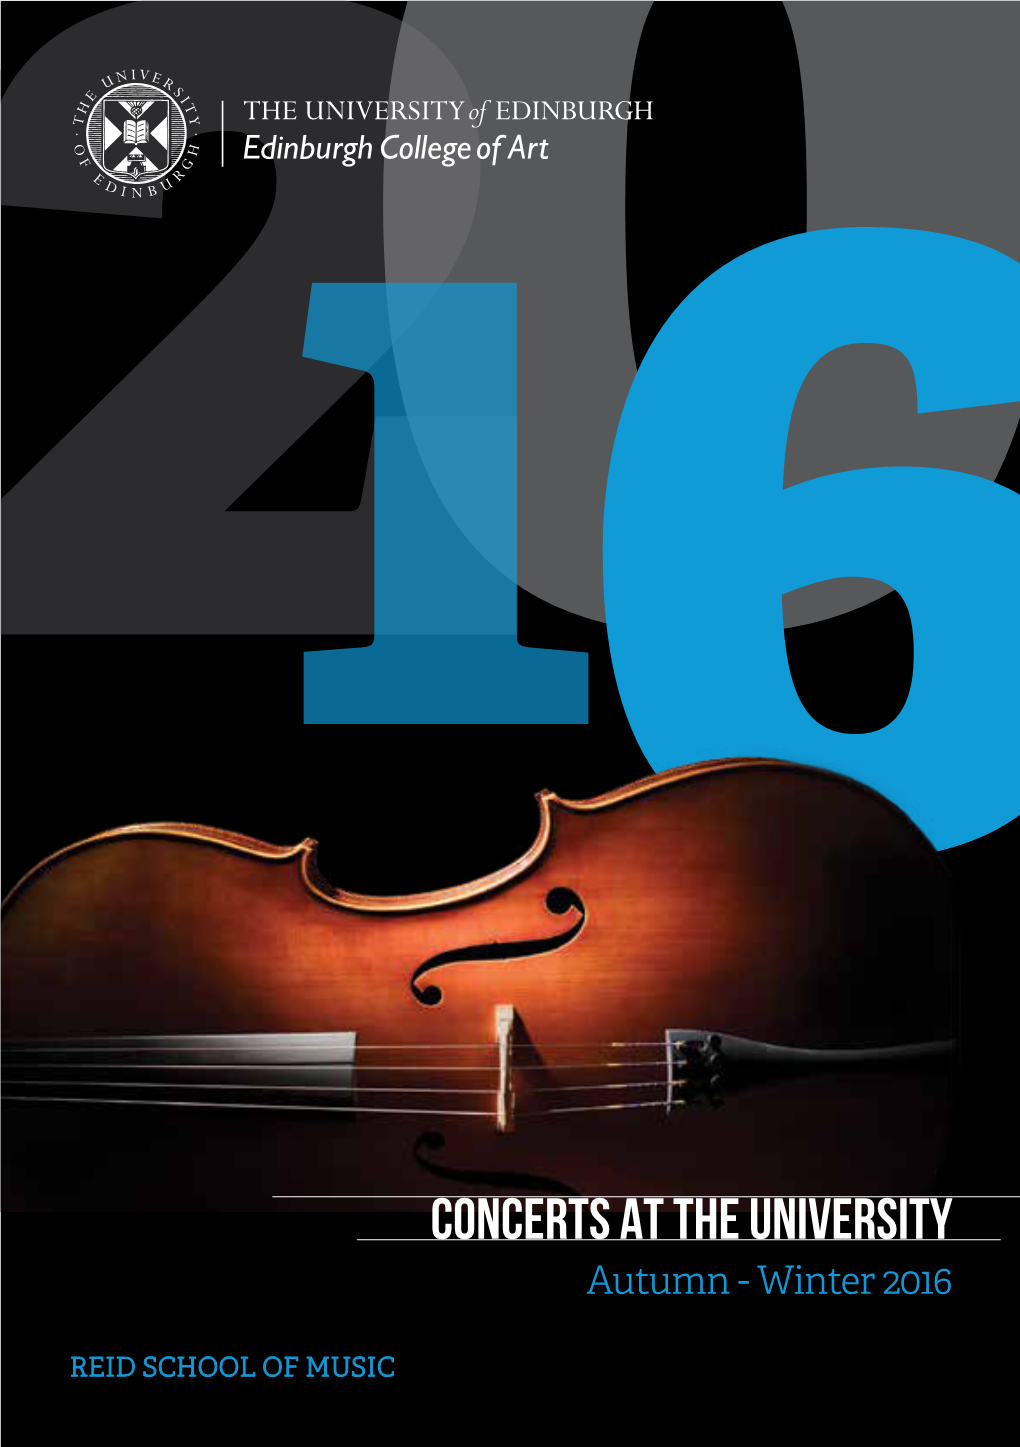 Concerts at the University of Edinburgh, Autumn